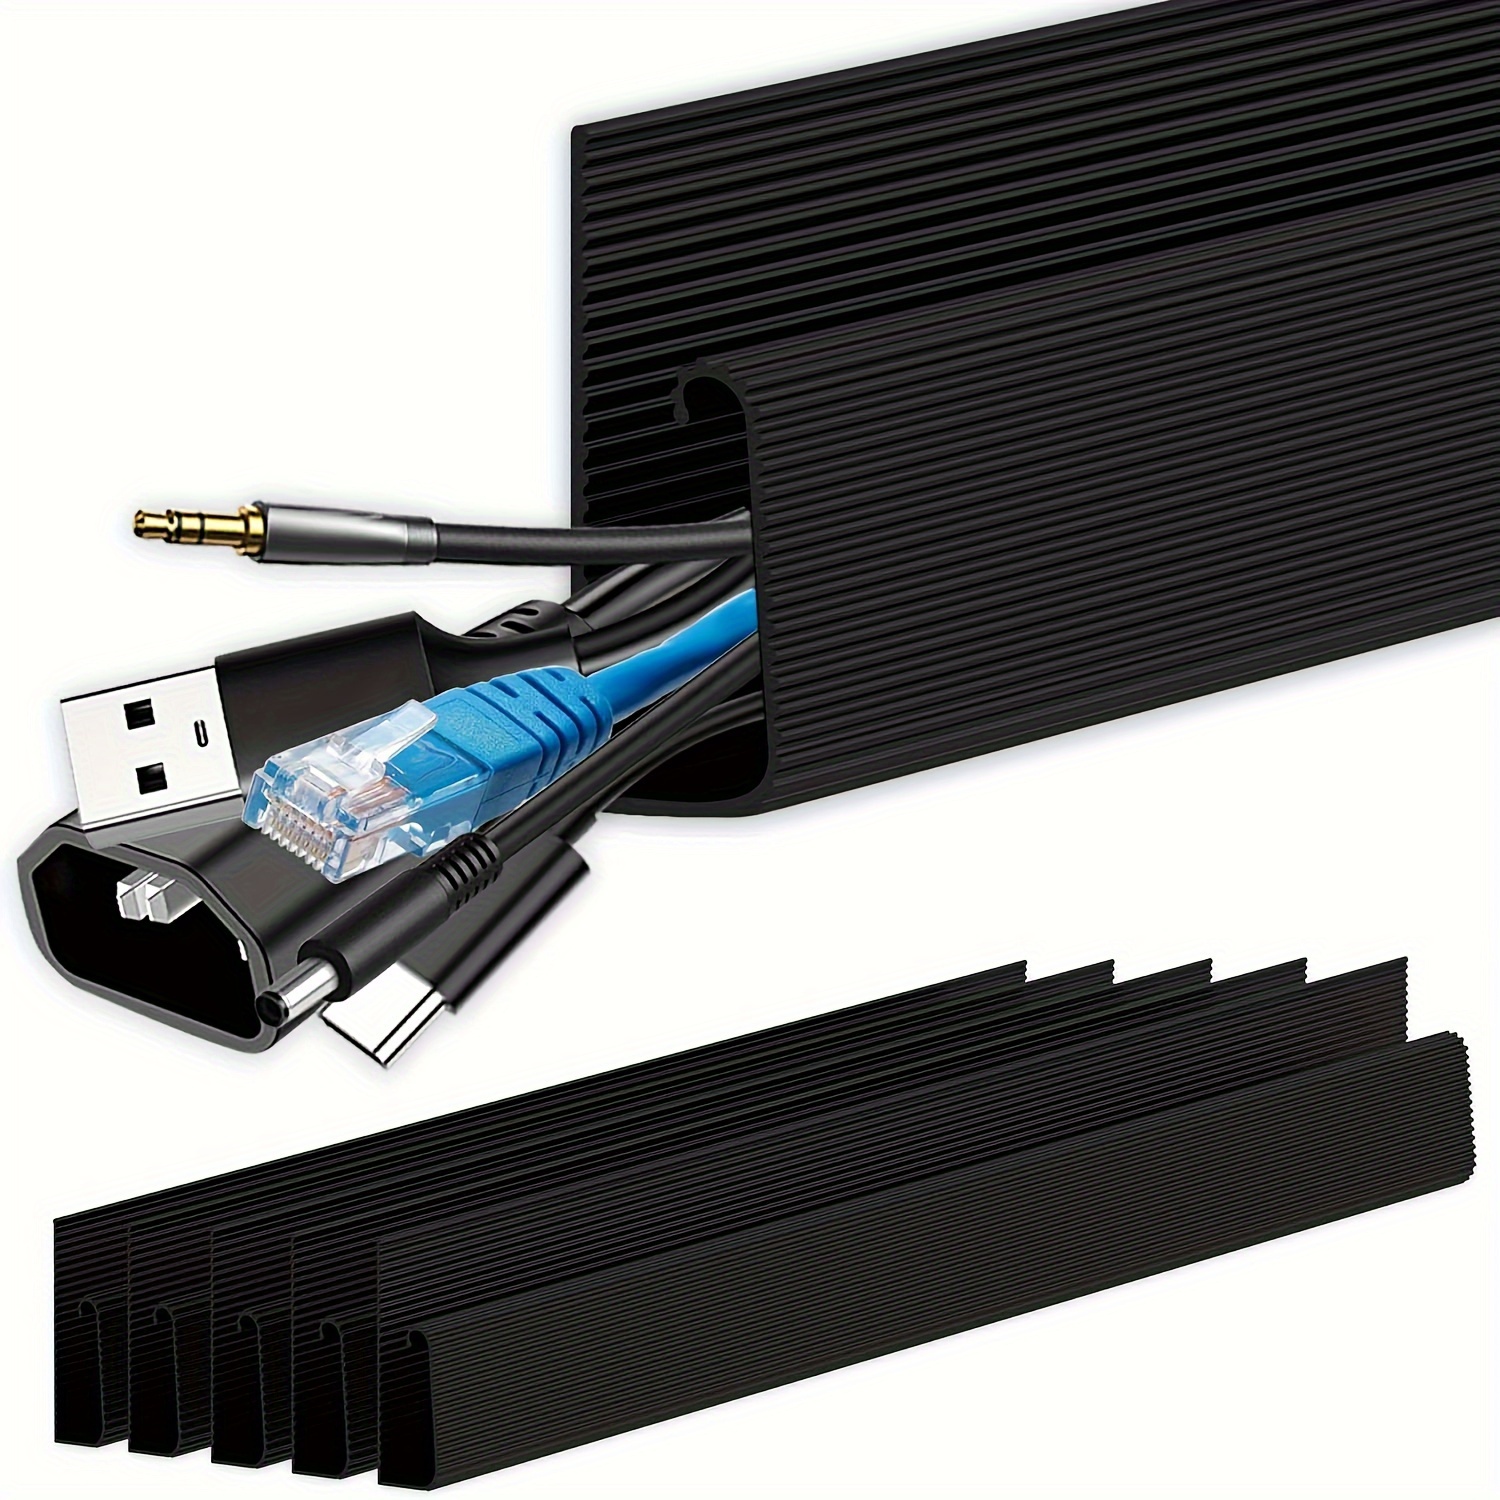  126pcs Cord Management Organizer Kit 4 Cable Sleeve